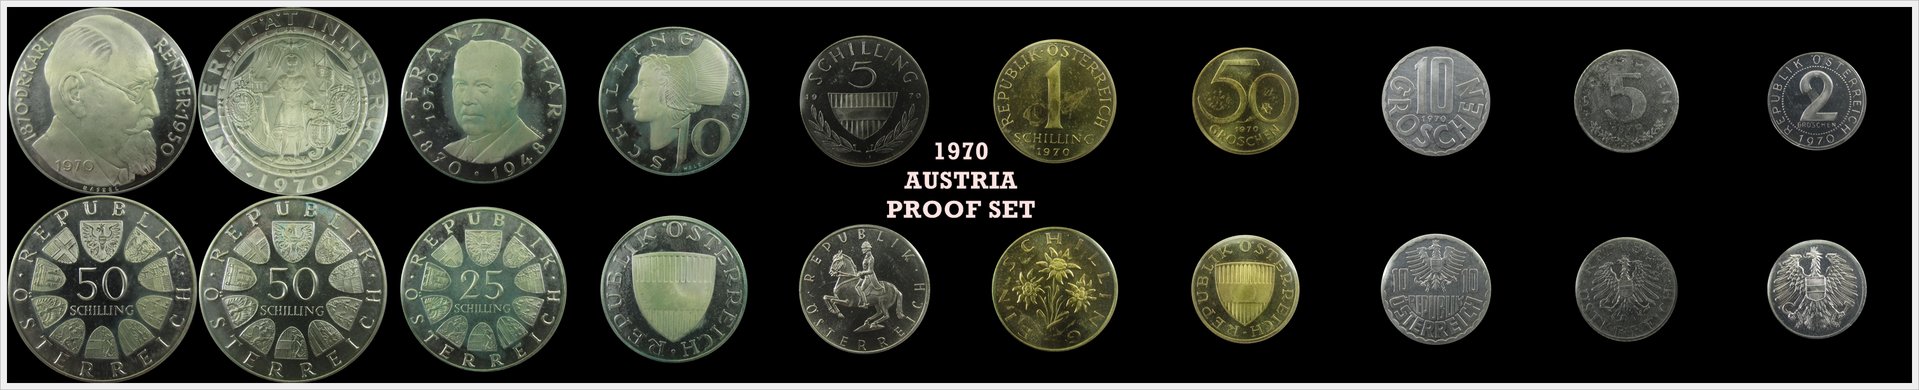 Austria 1970 Proof Set.jpg